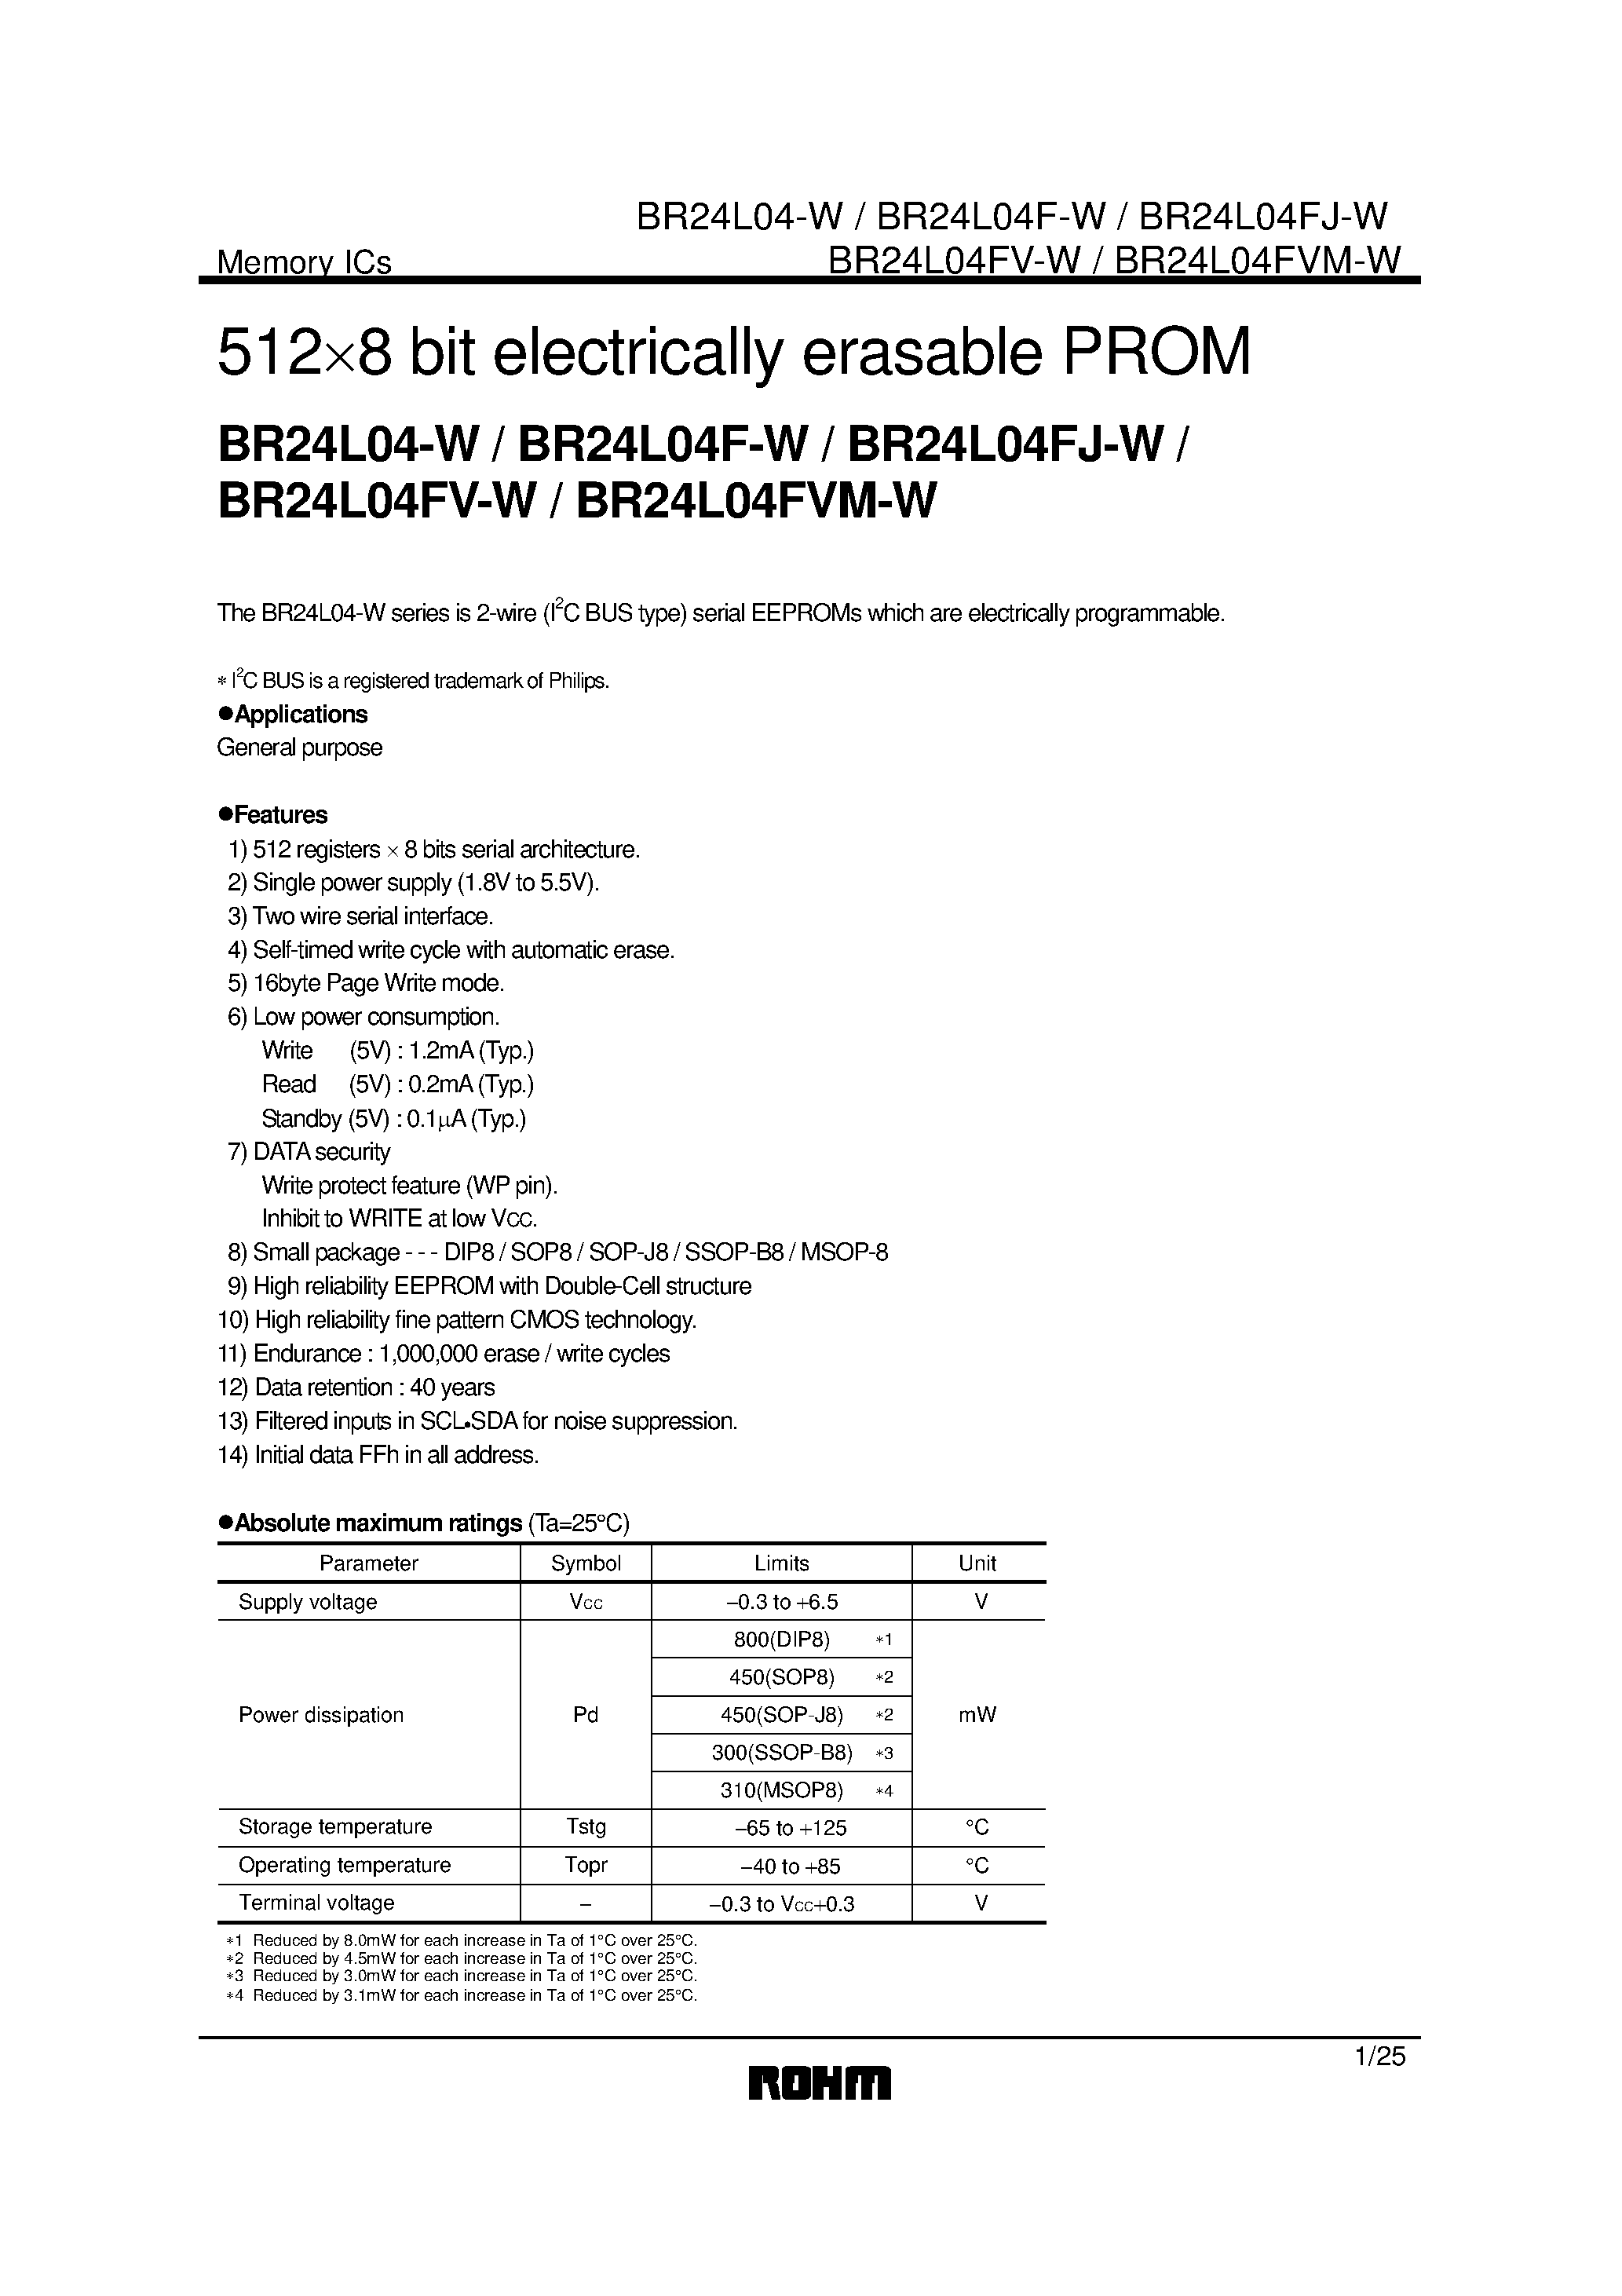 Даташит BR24L04FVM-W - 5128 bit electrically erasable PROM страница 1